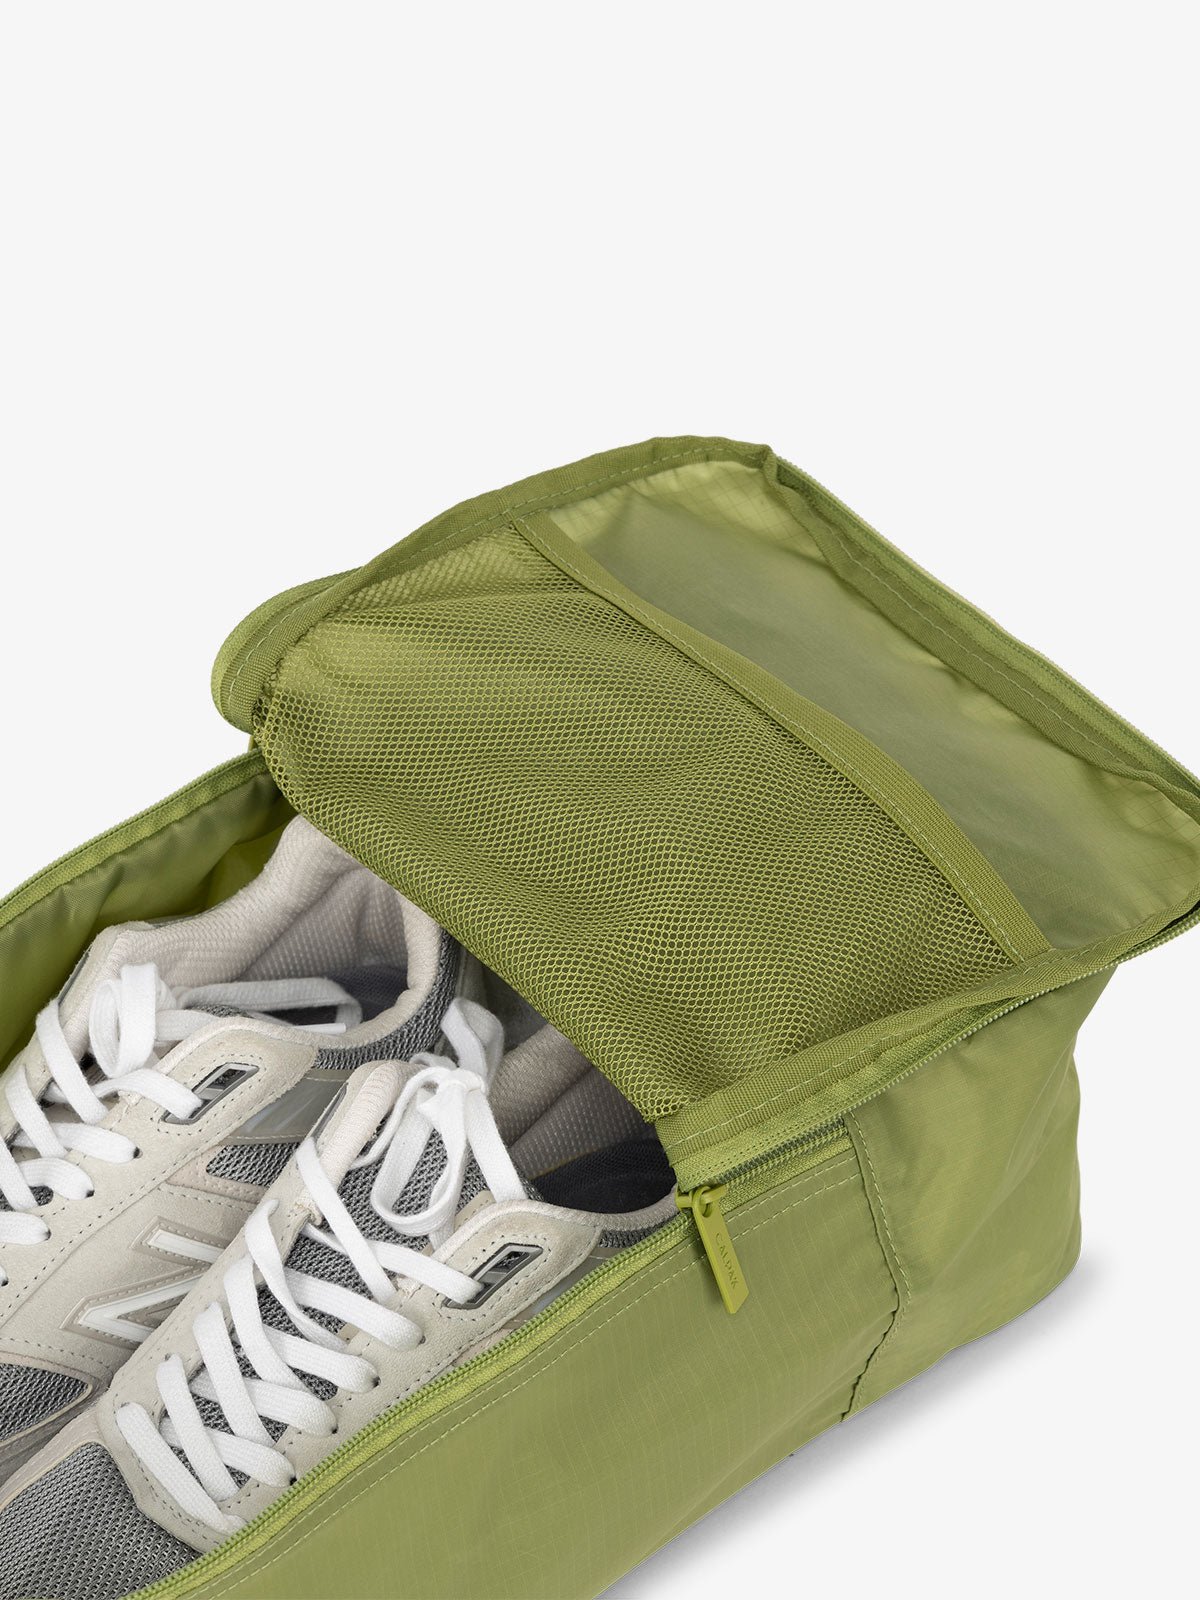 CALPAK Compakt zippered shoe travel bag with mesh pocket in green